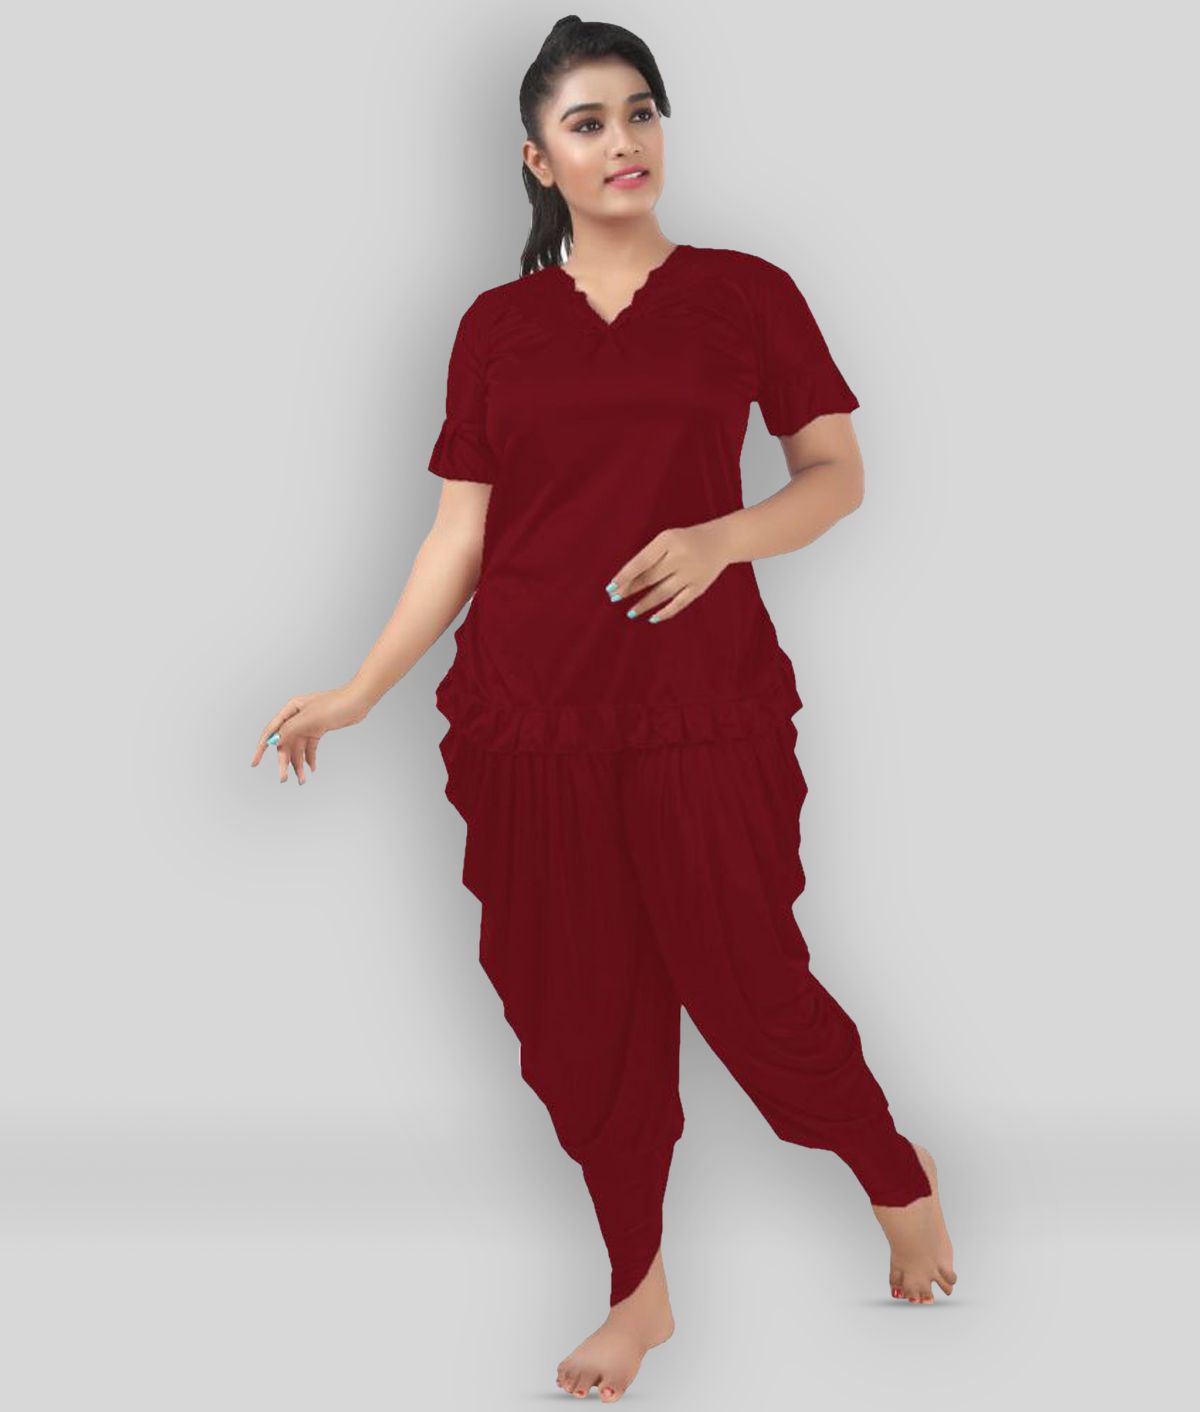     			SWANGIYA - Maroon Satin Women's Nightwear Nightsuit Sets ( Pack of 1 )